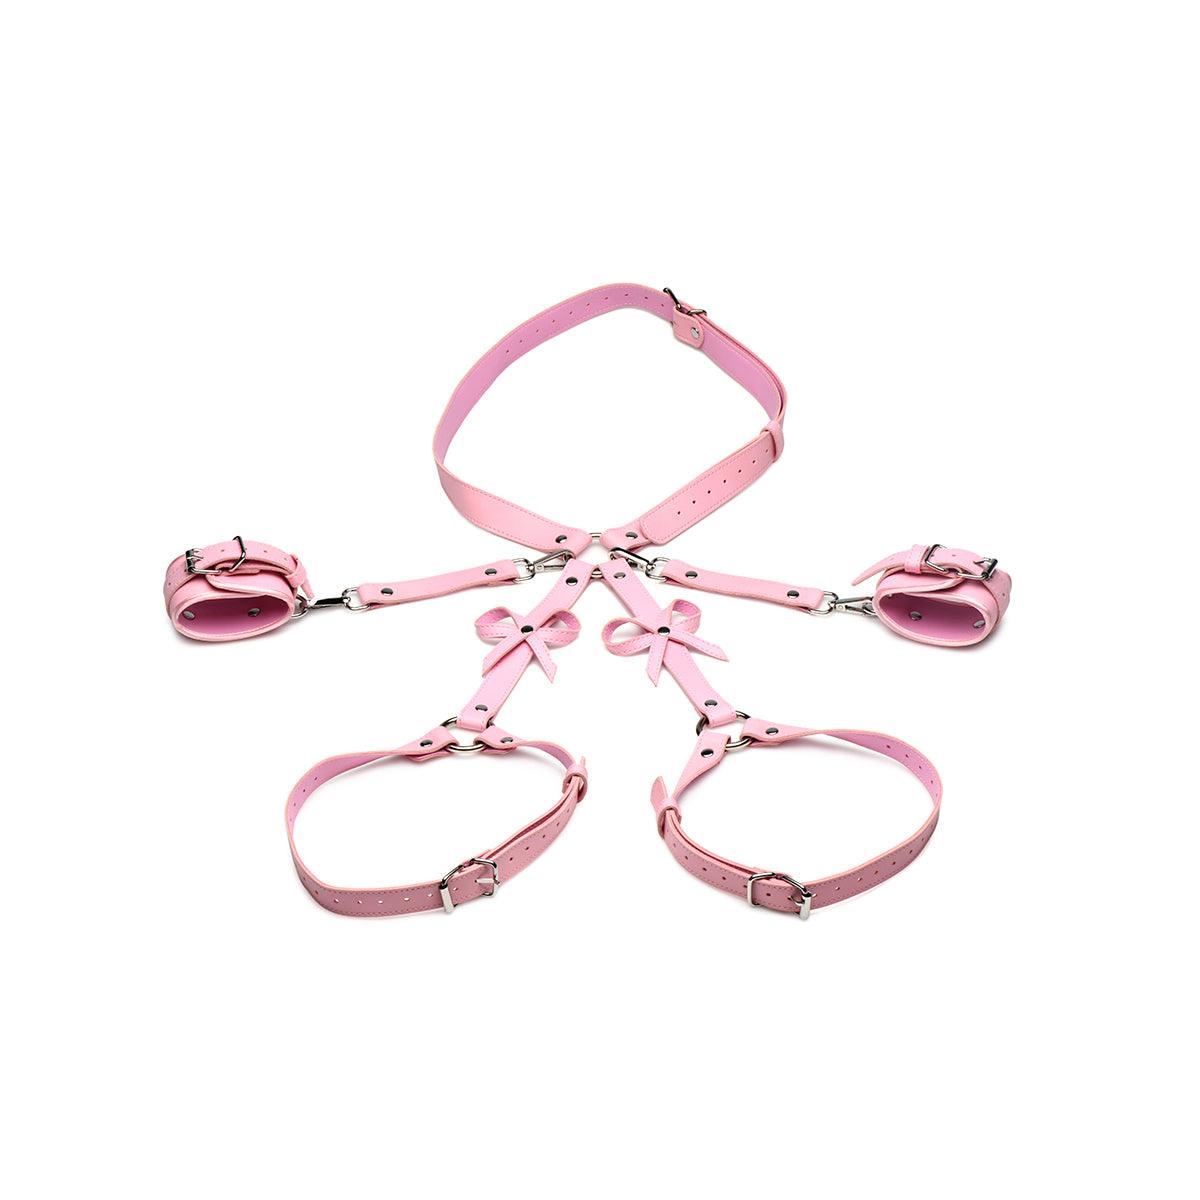 Bondage Harness with Bows M/L - Pink - shop enby